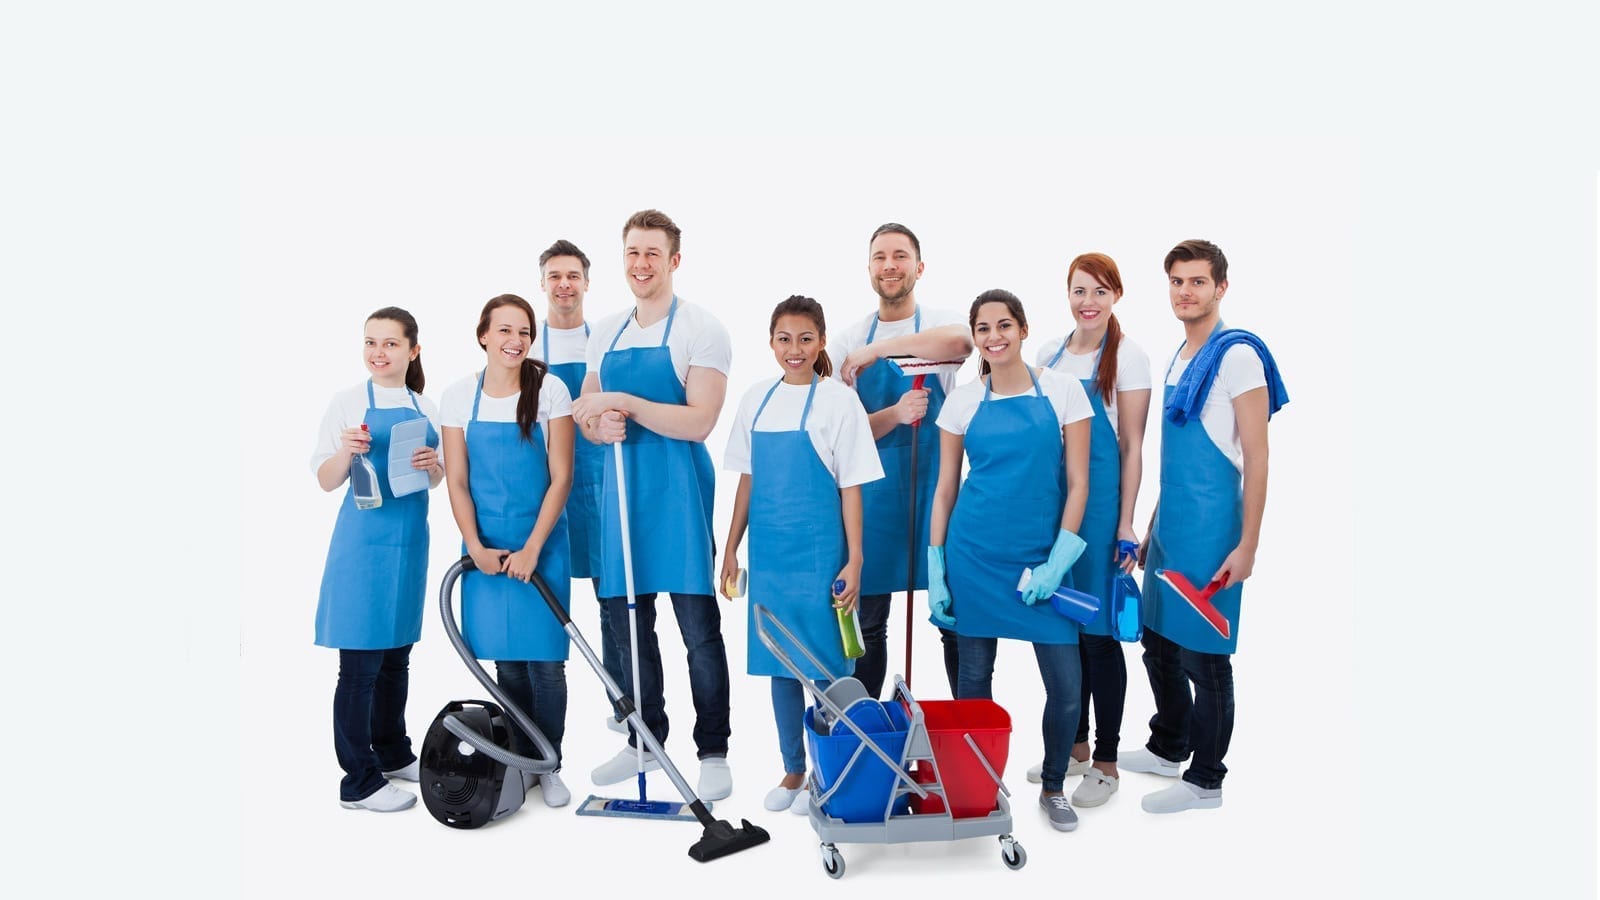 KliknClean Solusi Praktis dan Efisien dengan Jasa Cleaning Service Profesional